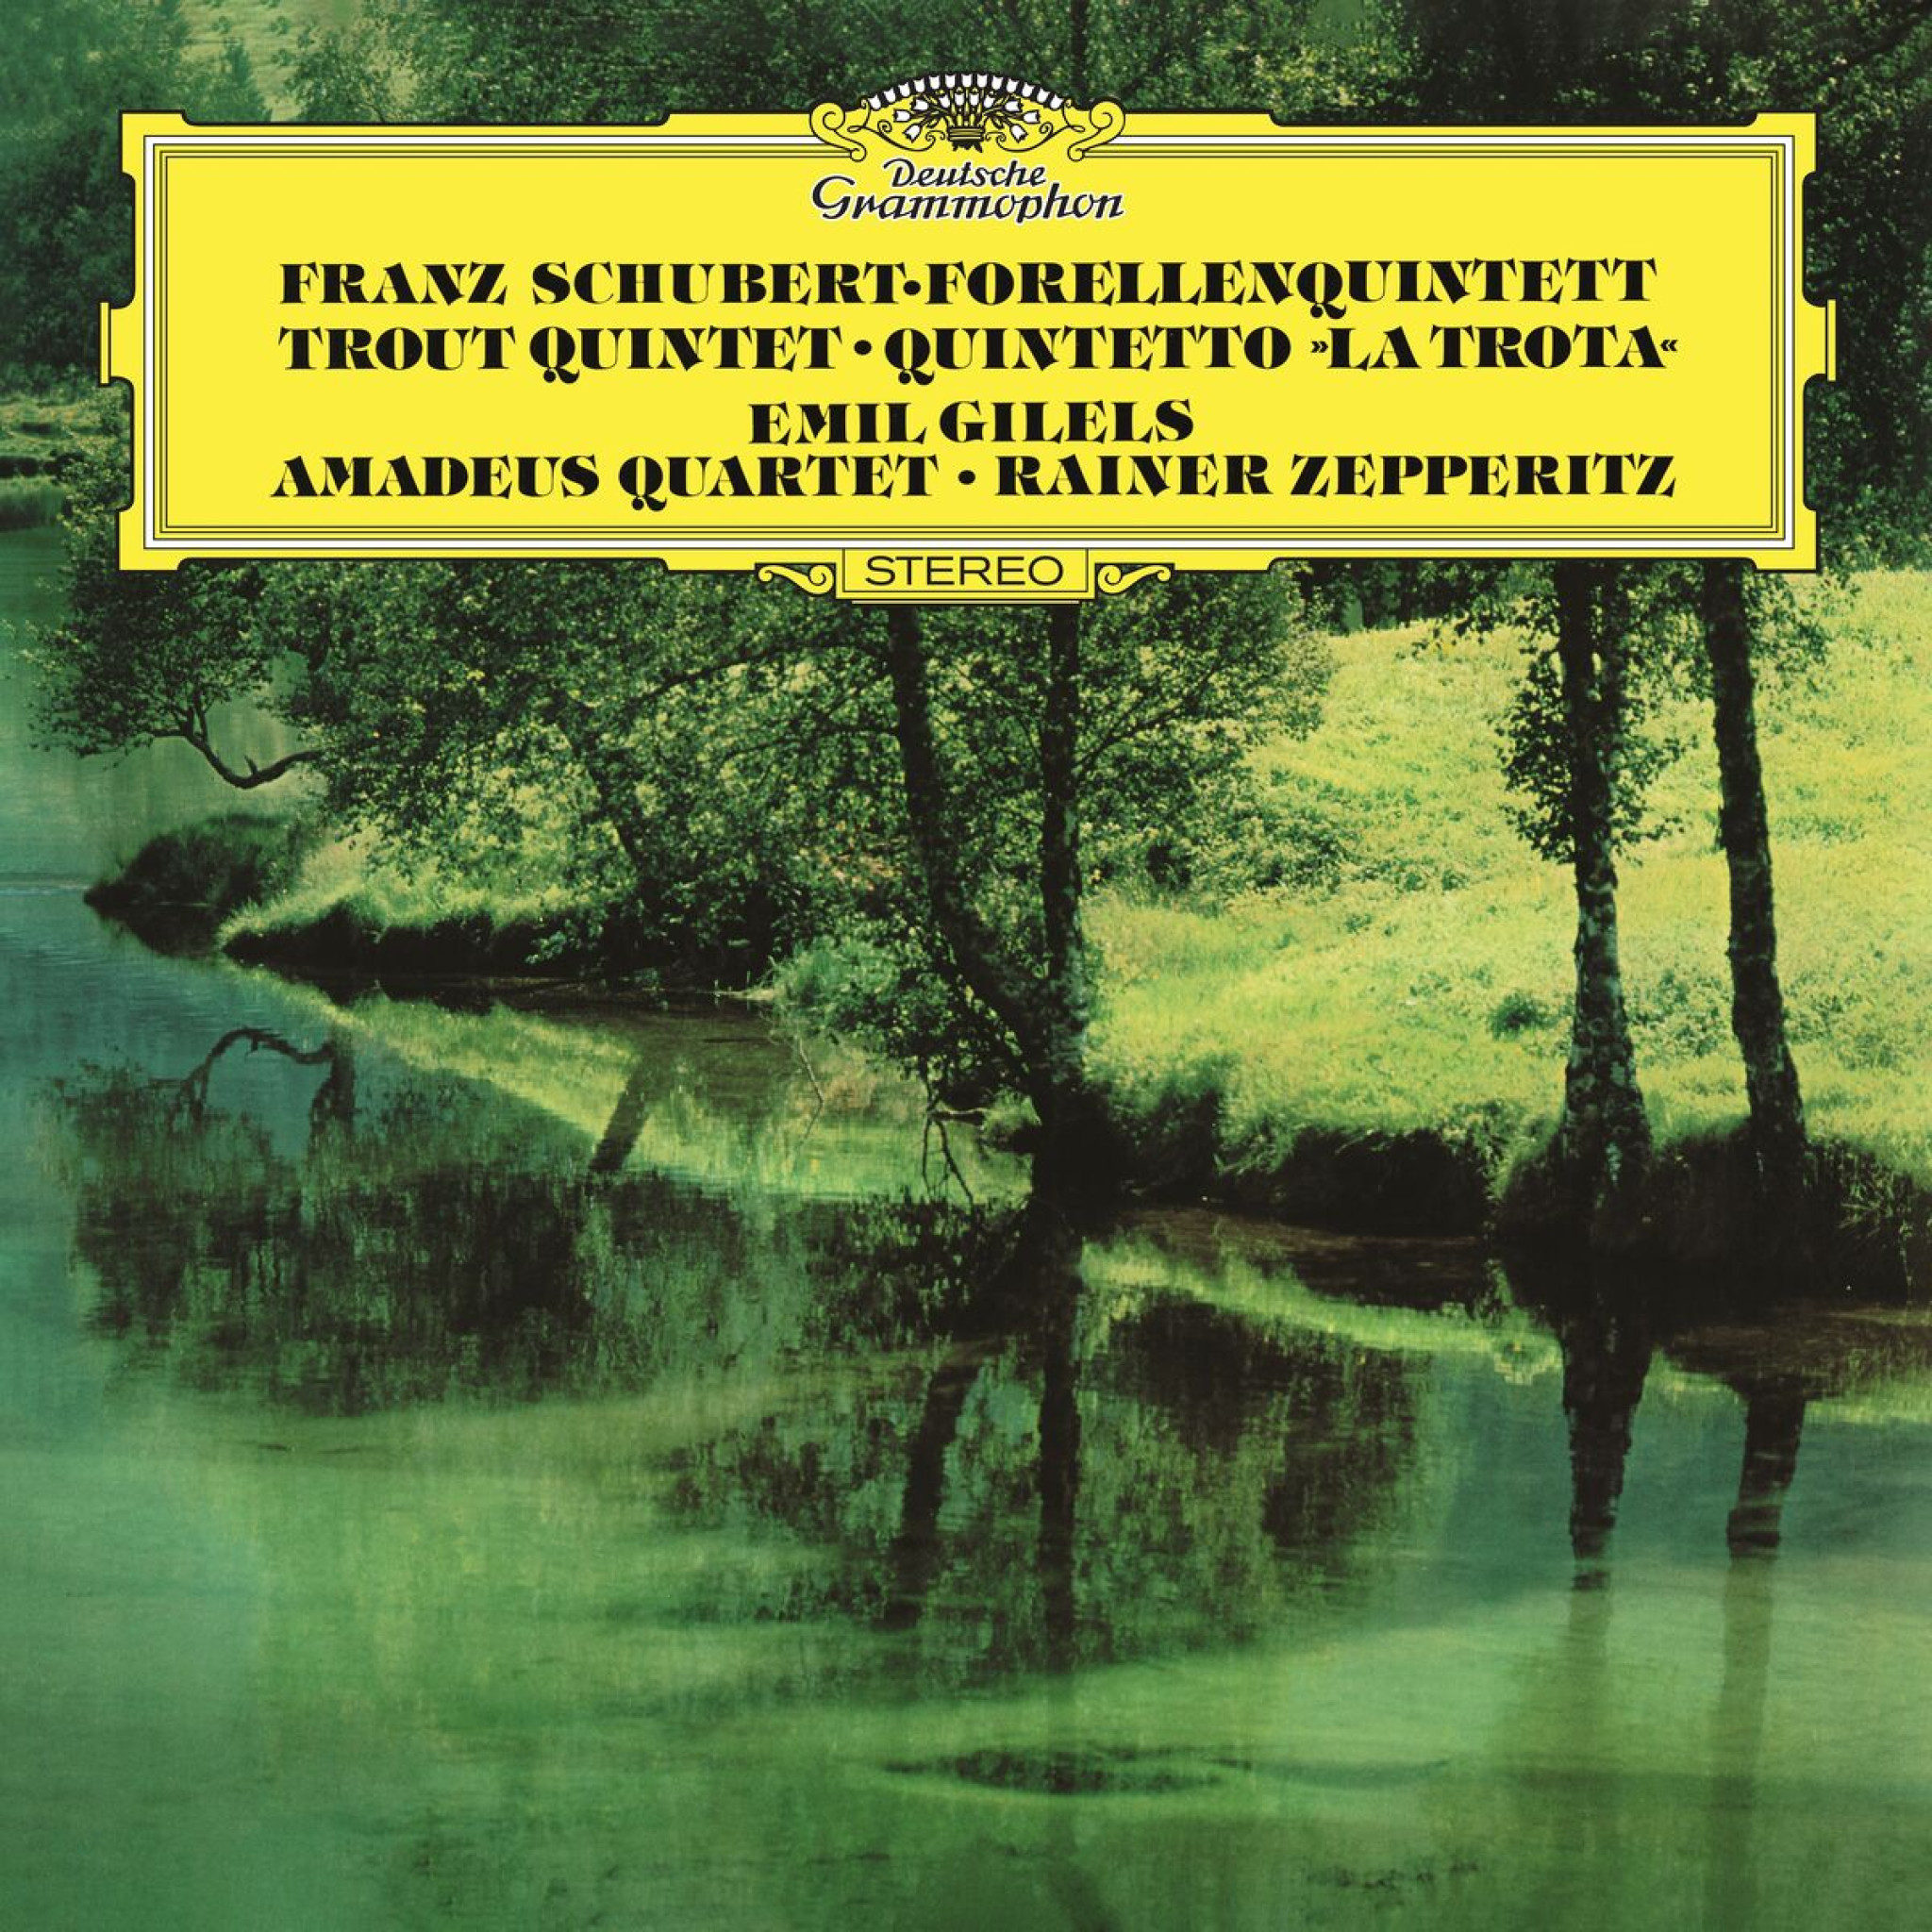 Schubert: Piano Quintet in A Major, D. 667 "Trout"